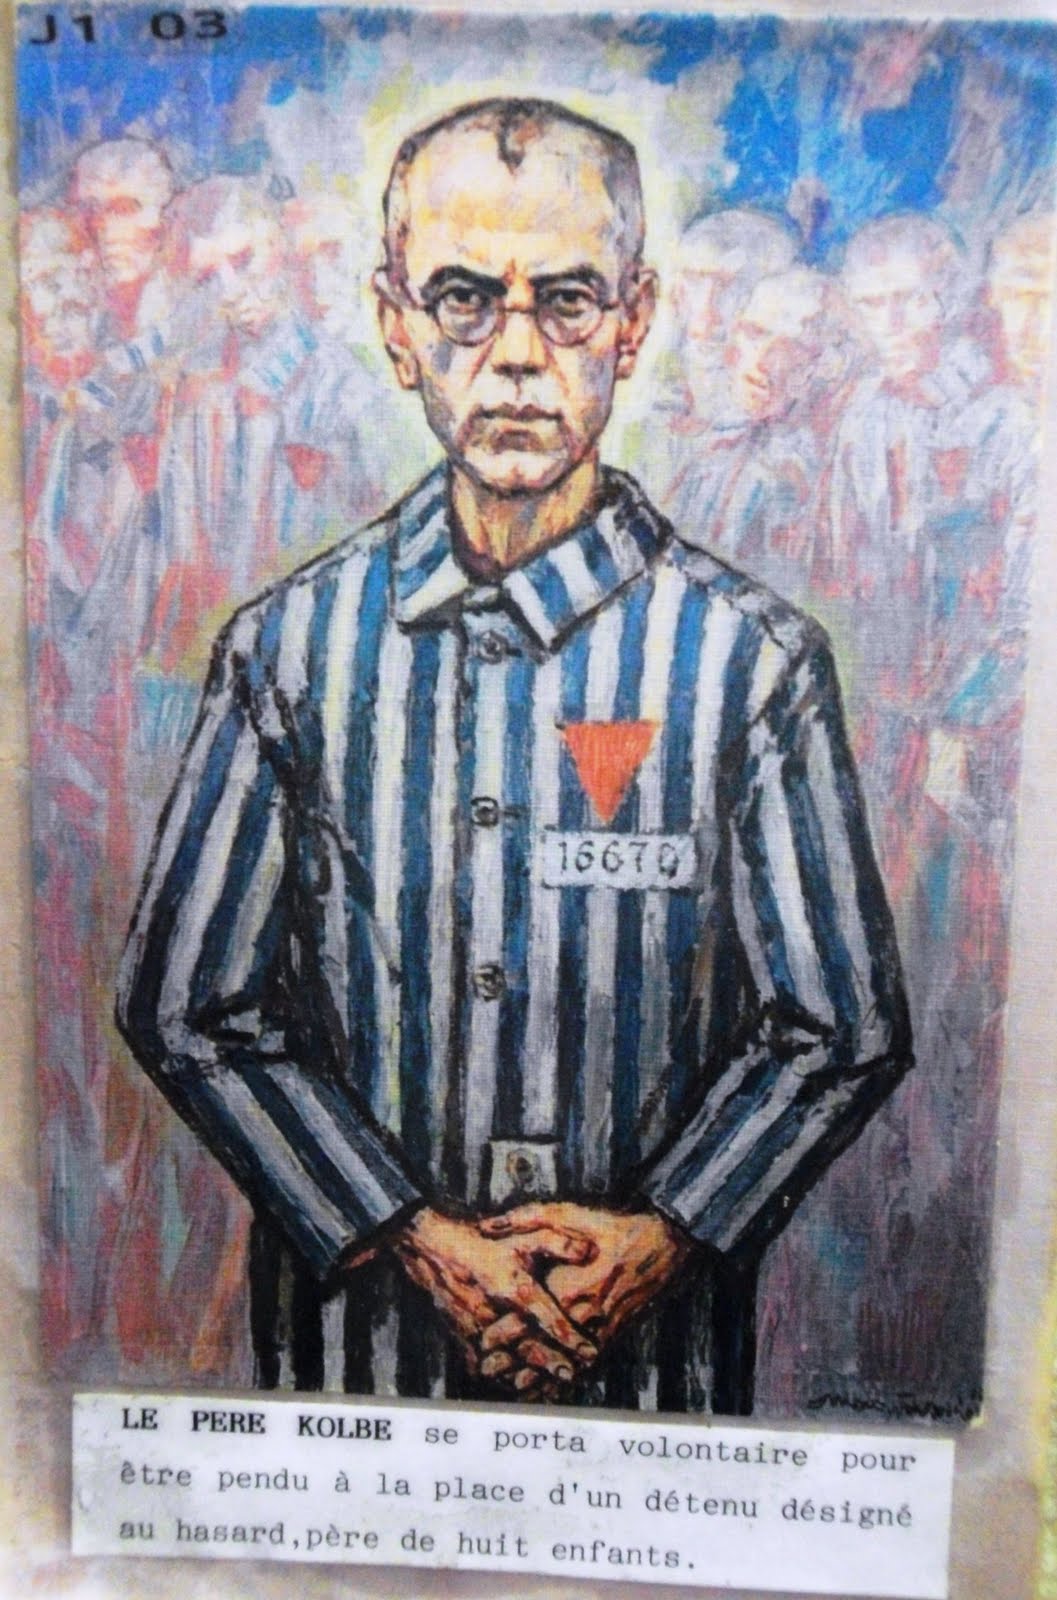 WW2 - The Second World War: Maximilian Kolbe, an Auschwitz martyr